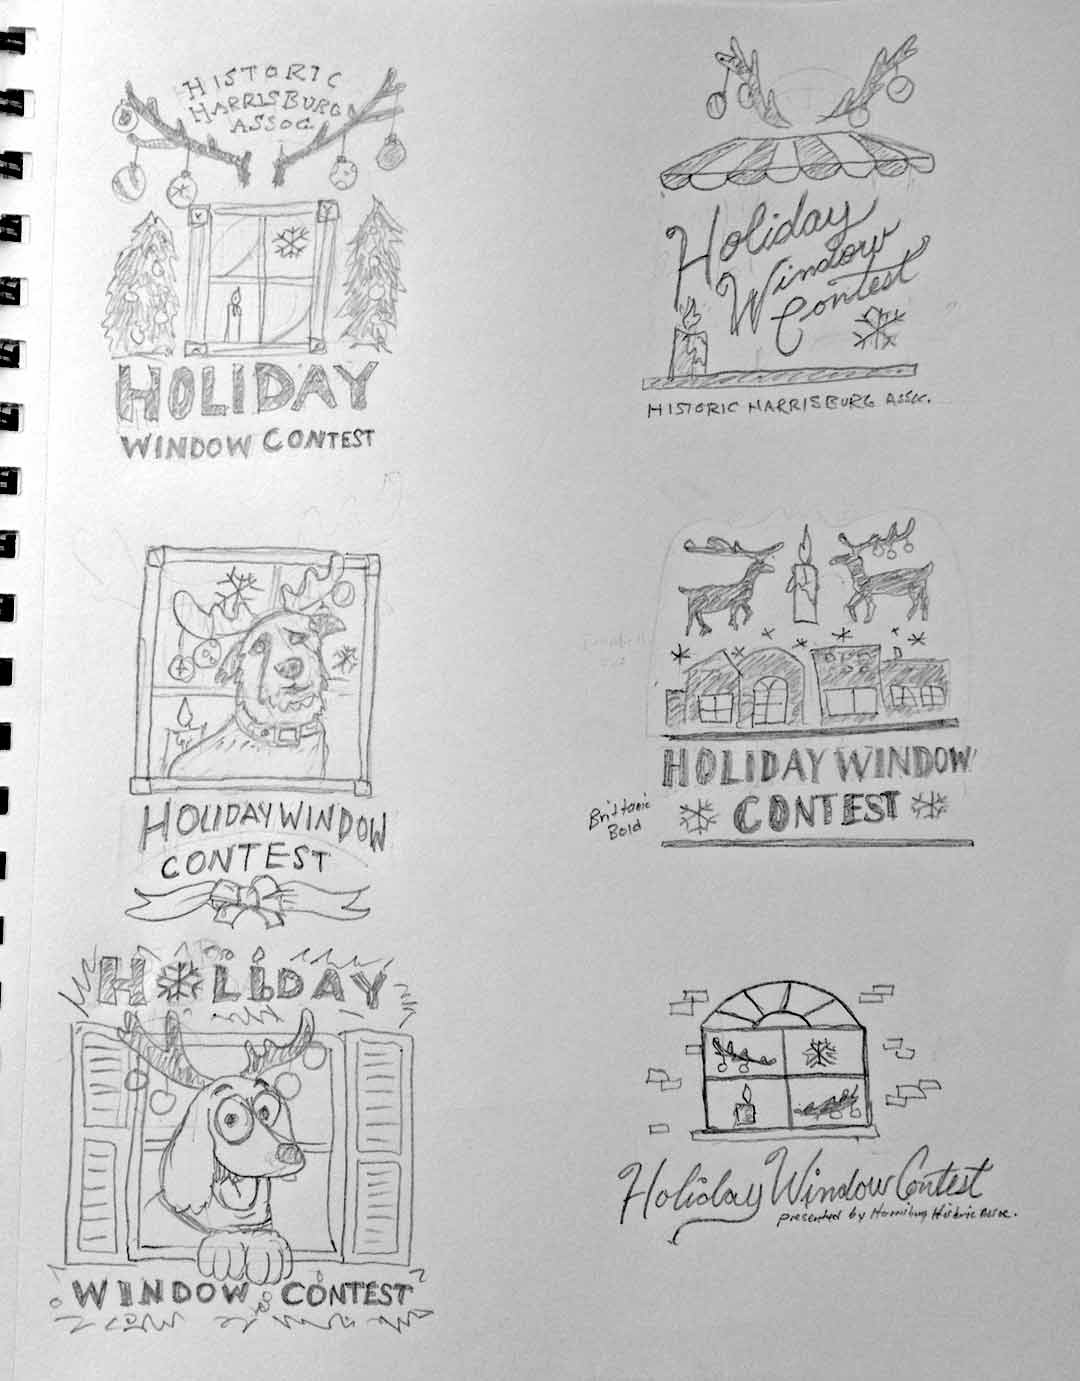 Historic Harrisburg Association Holiday Window Contest logo sketches